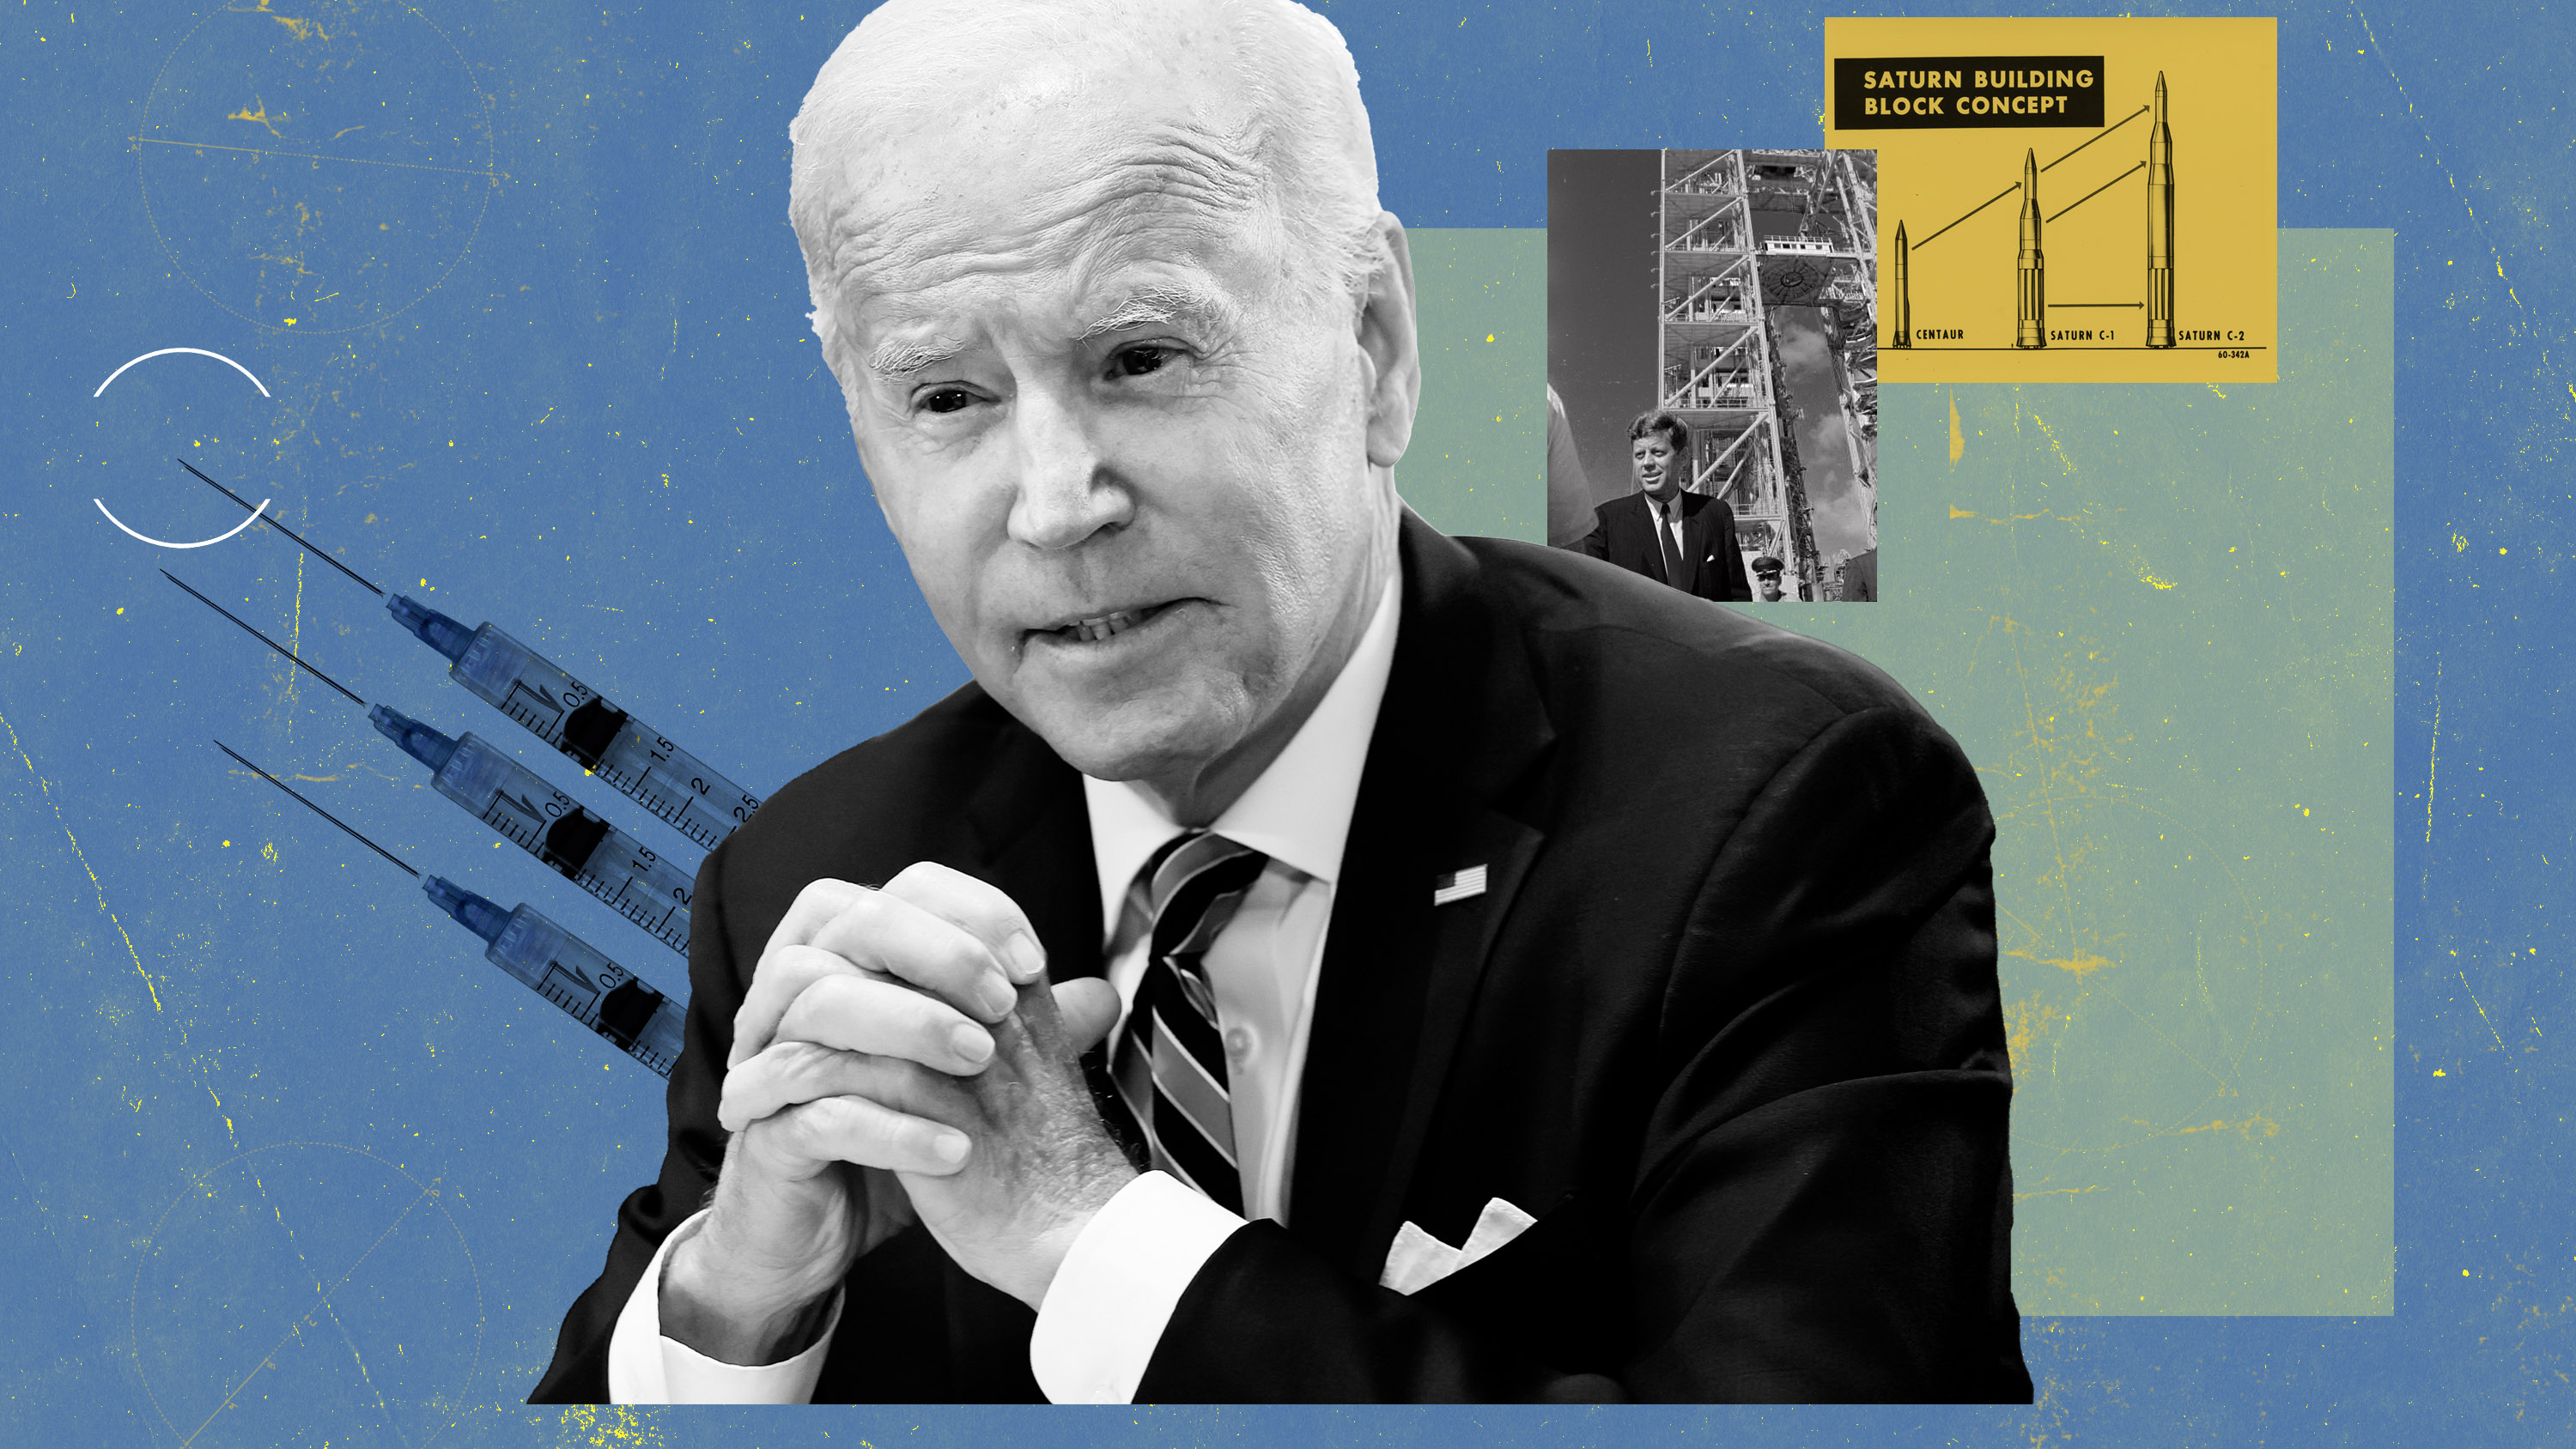 Biden announces Cancer "Moonshot" project at JFK Library